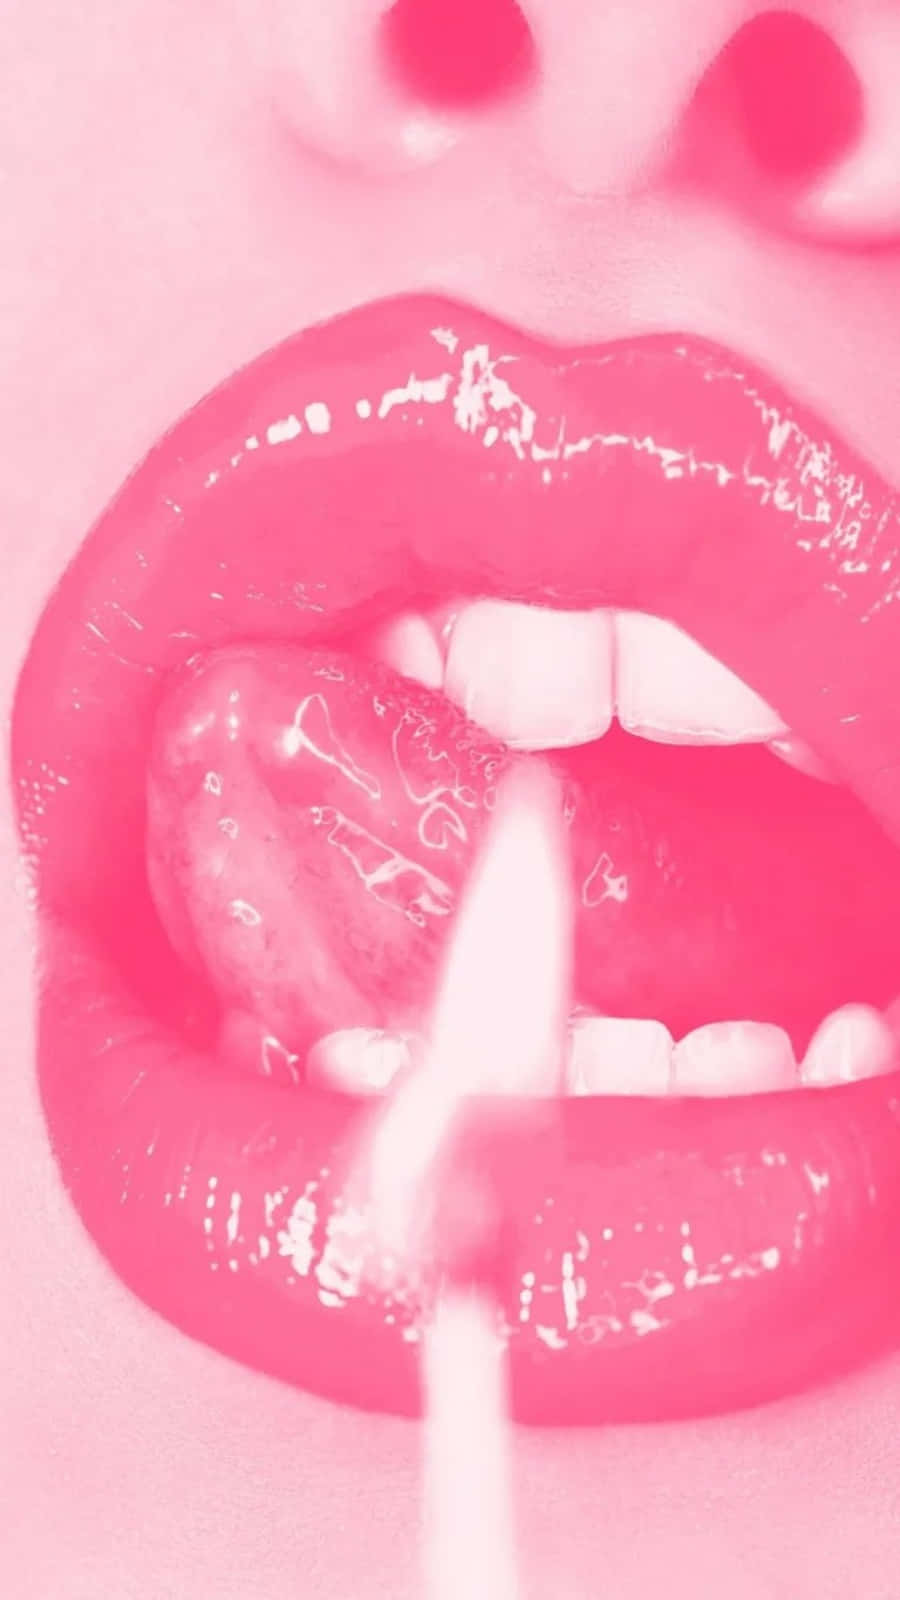 Sensual Pink Lipstick Experience Wallpaper